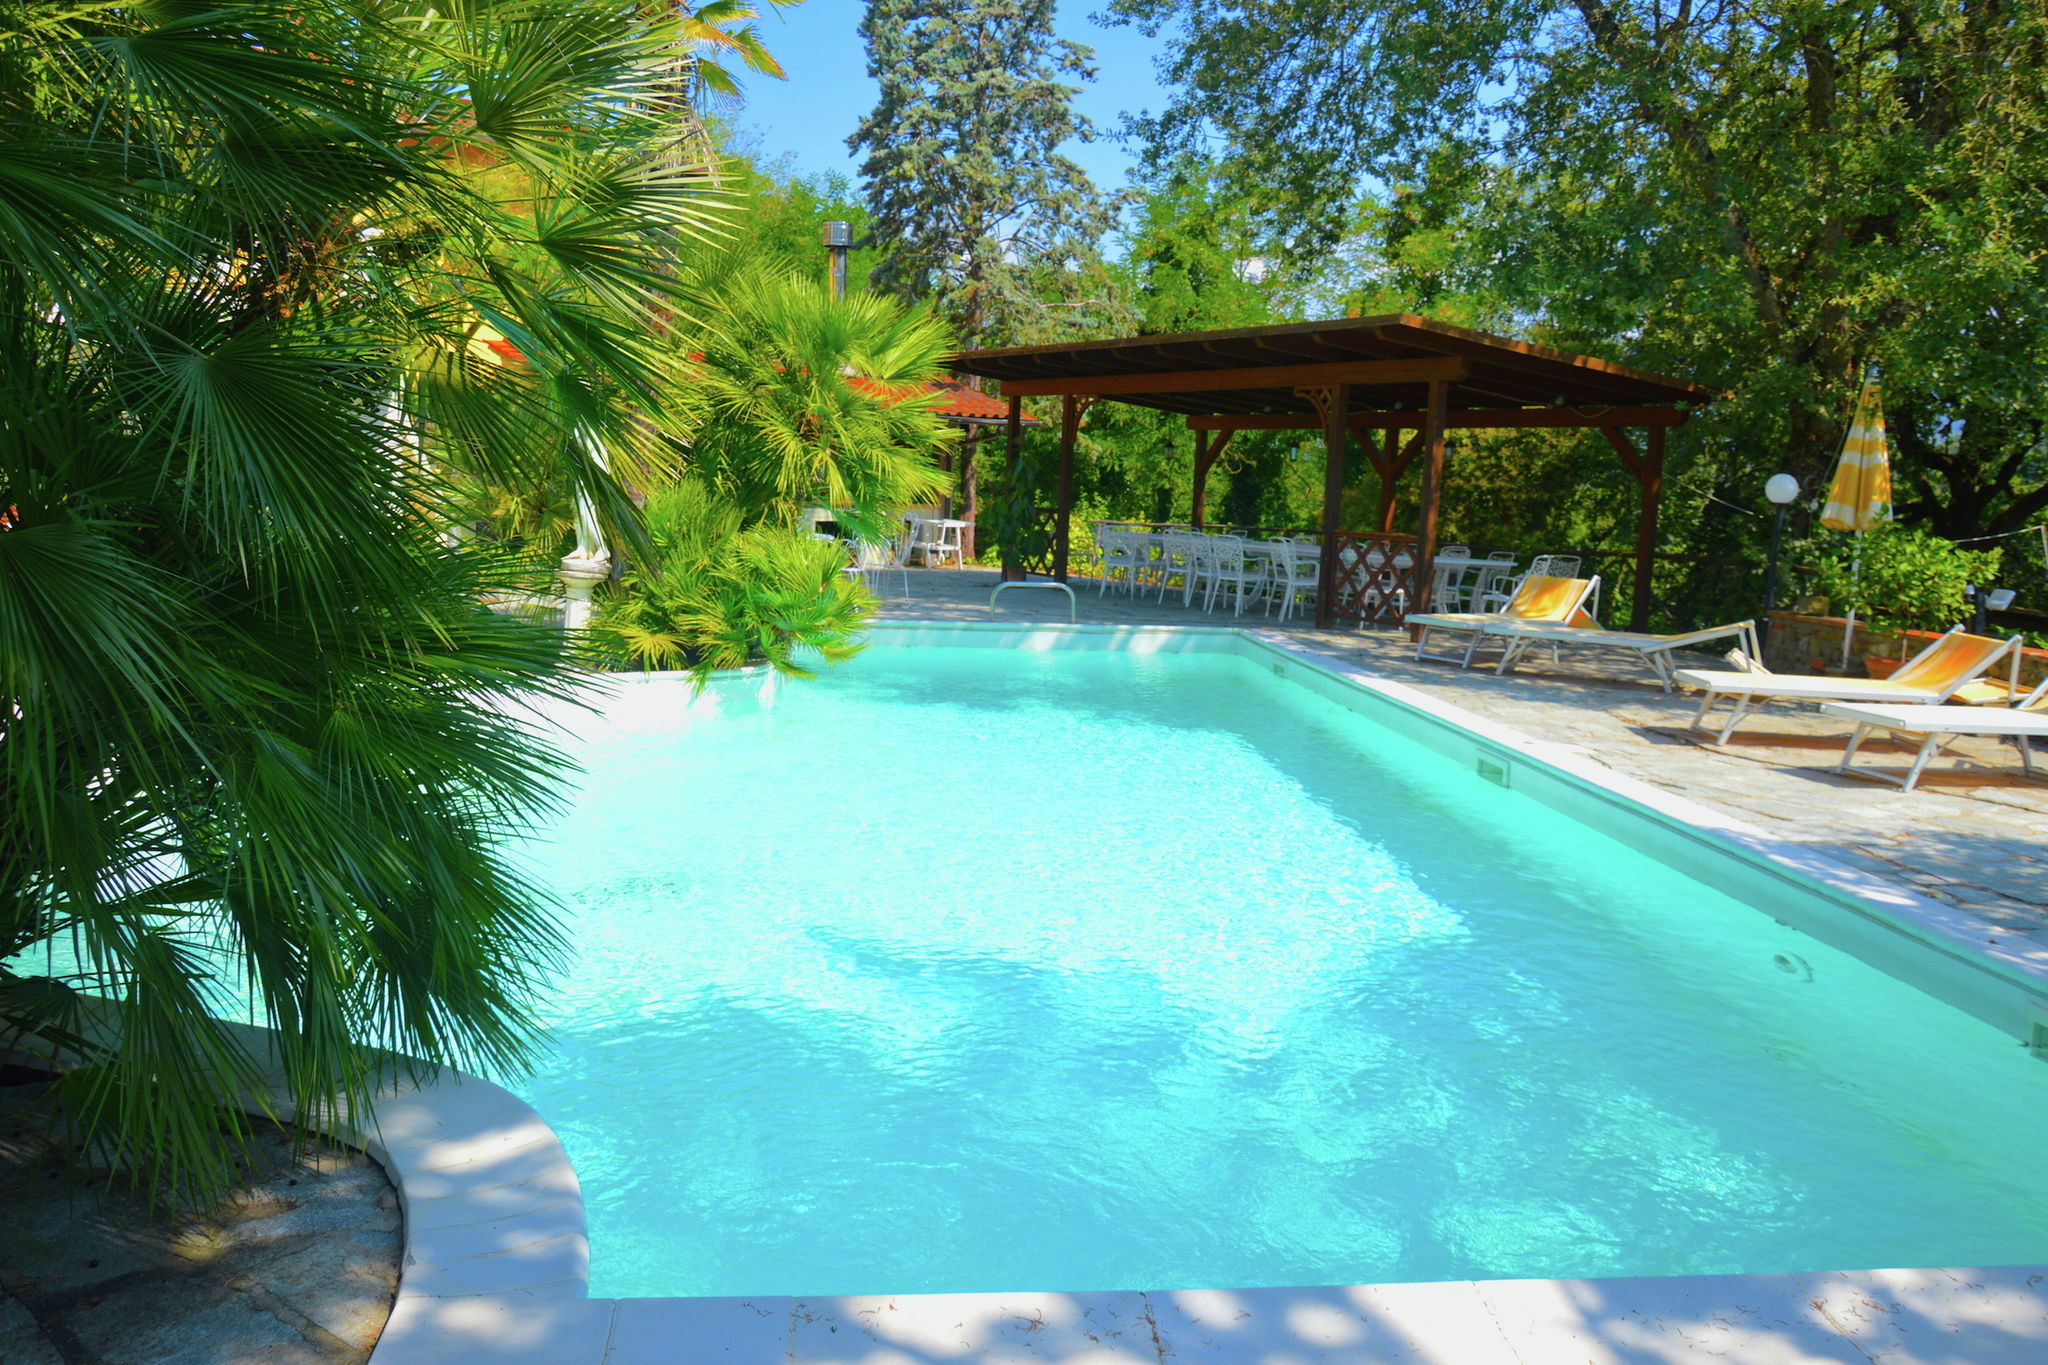 Spacious Holiday Home in Terranuova Bracciolini with Pool